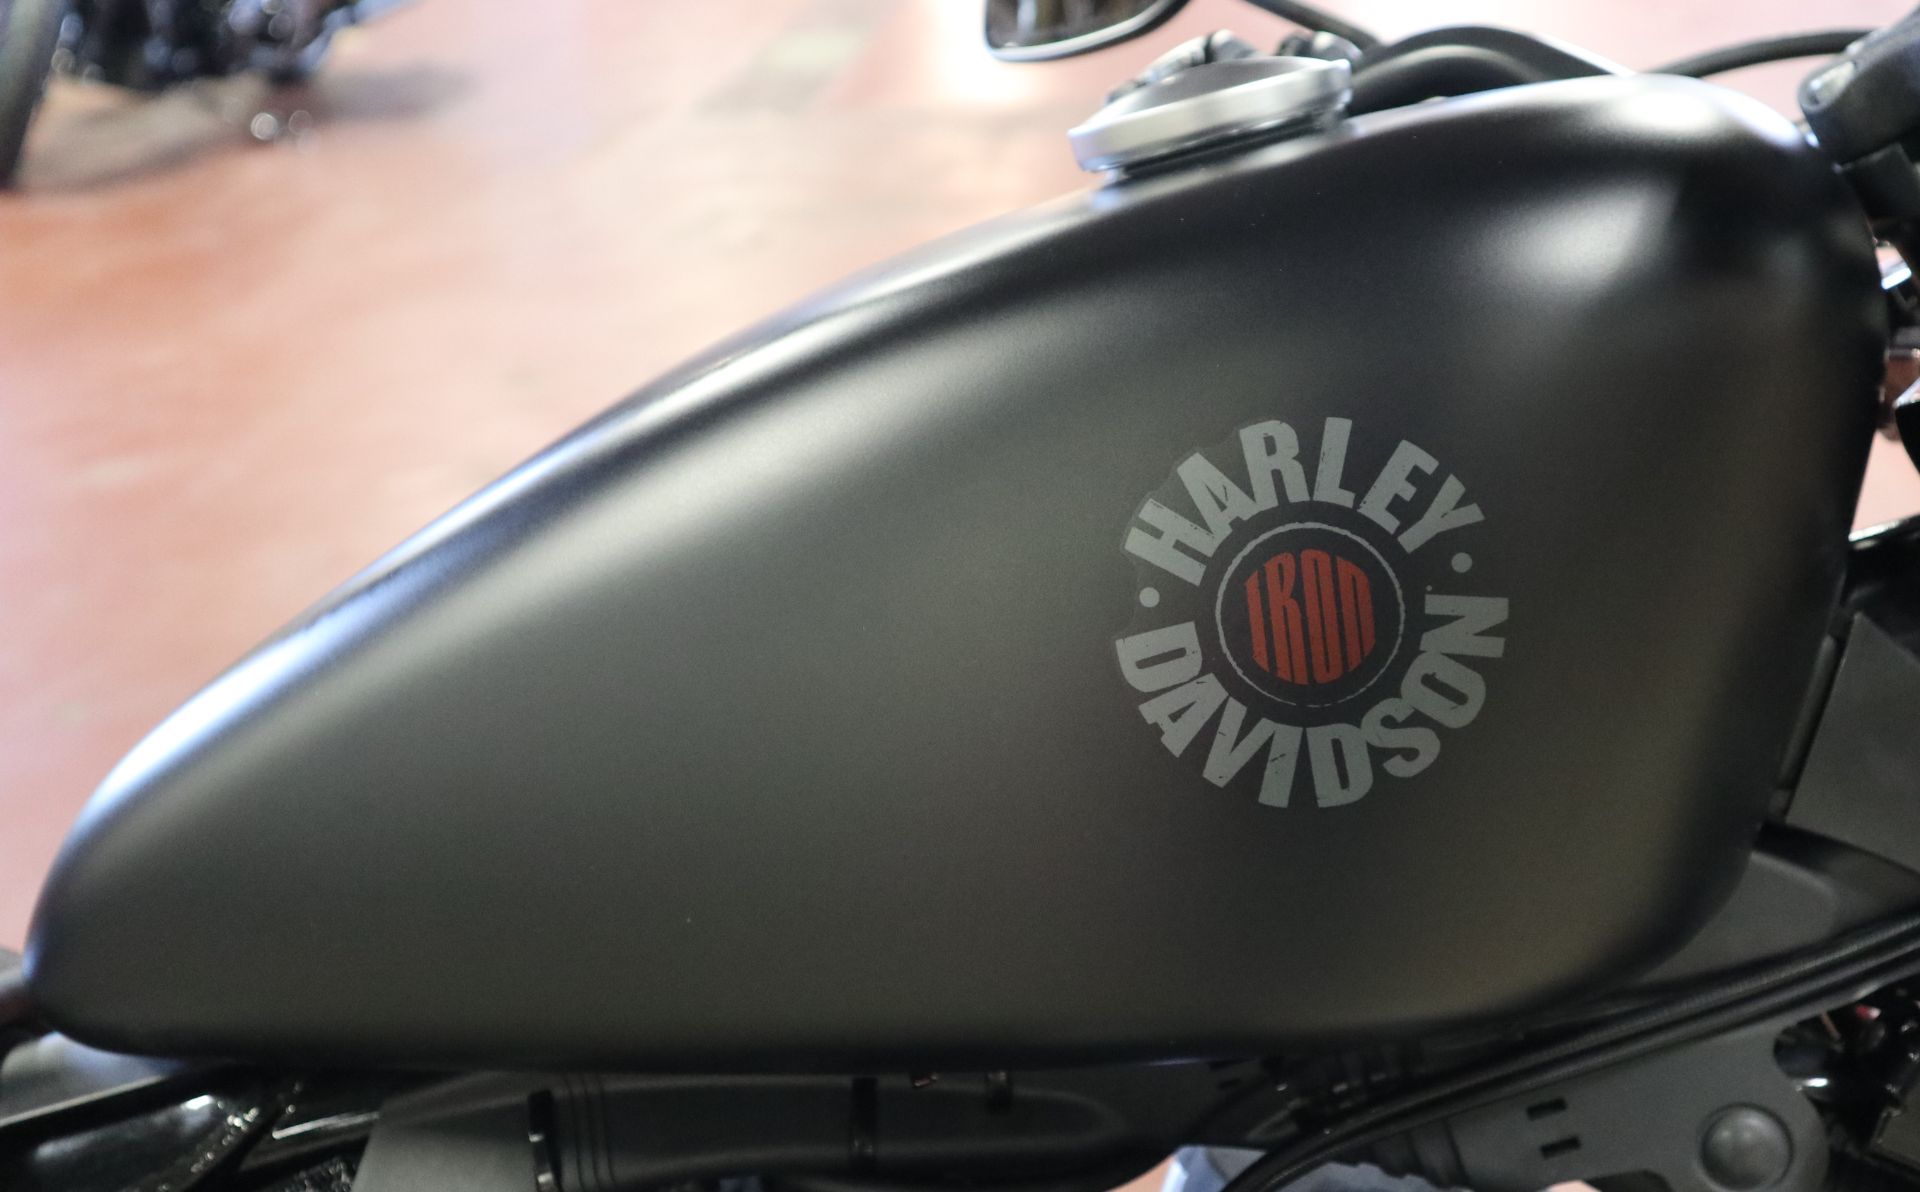 2021 Harley-Davidson Iron 883™ in New London, Connecticut - Photo 9